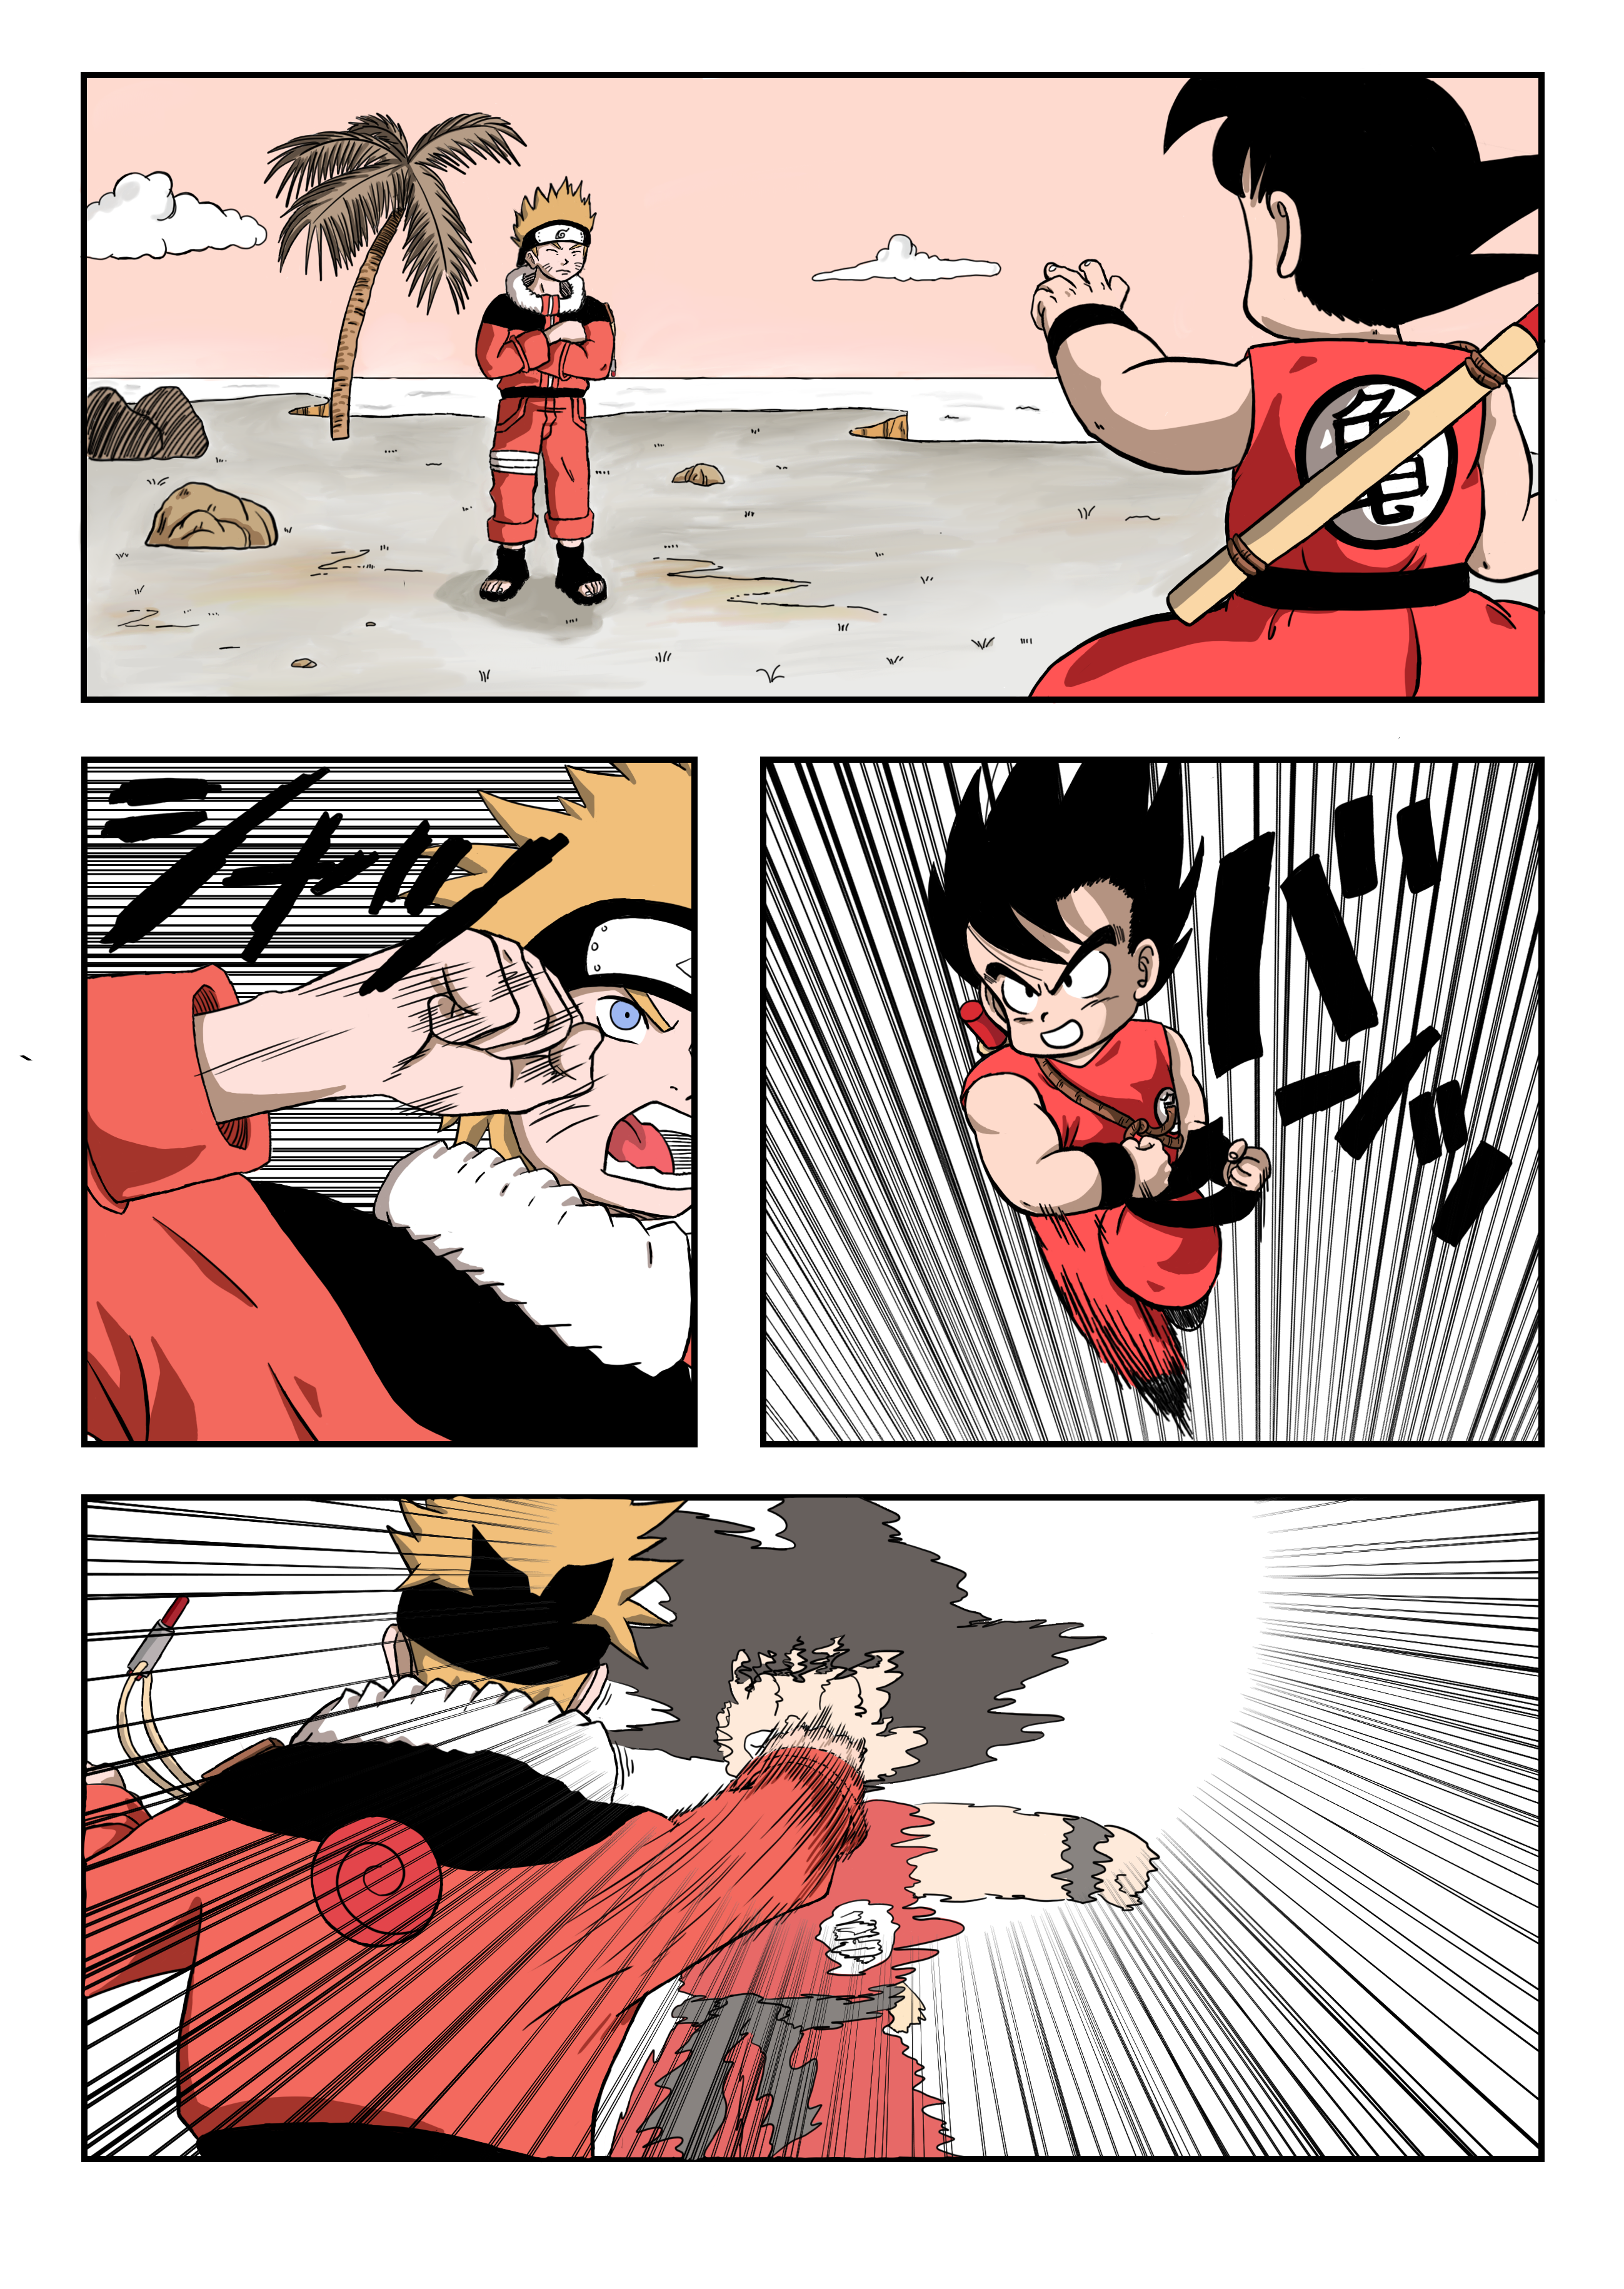 Commission - Naruto VS Goku by dannex009 on DeviantArt